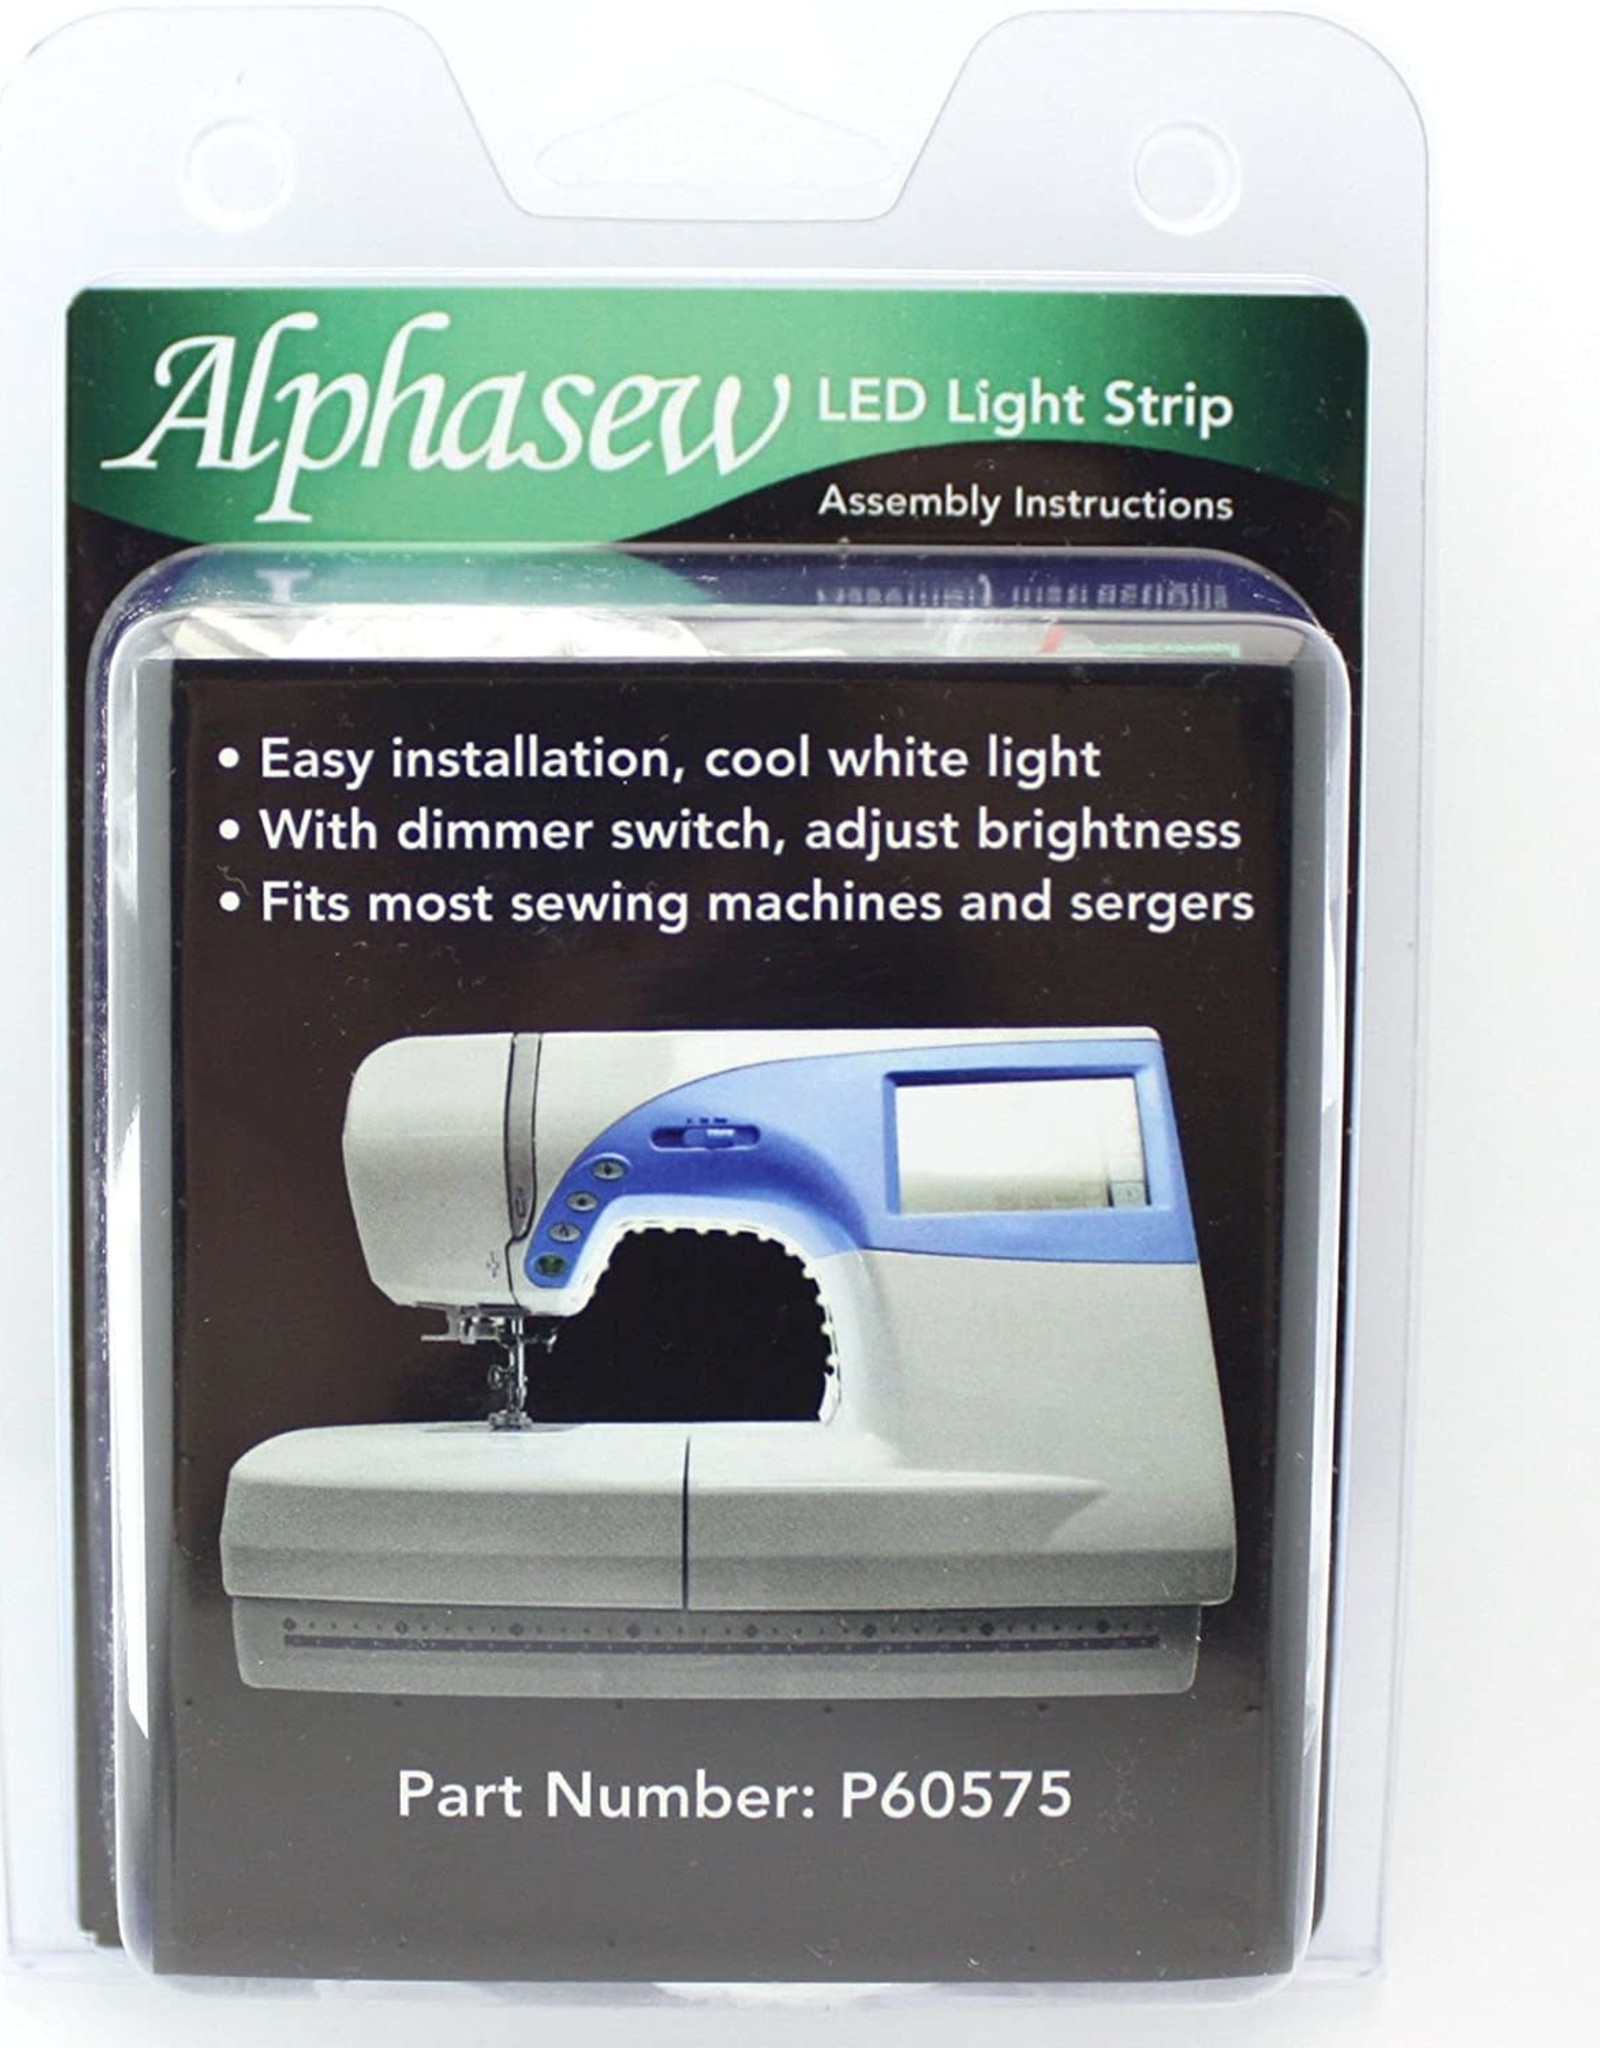 Alphasew LED Light Strip